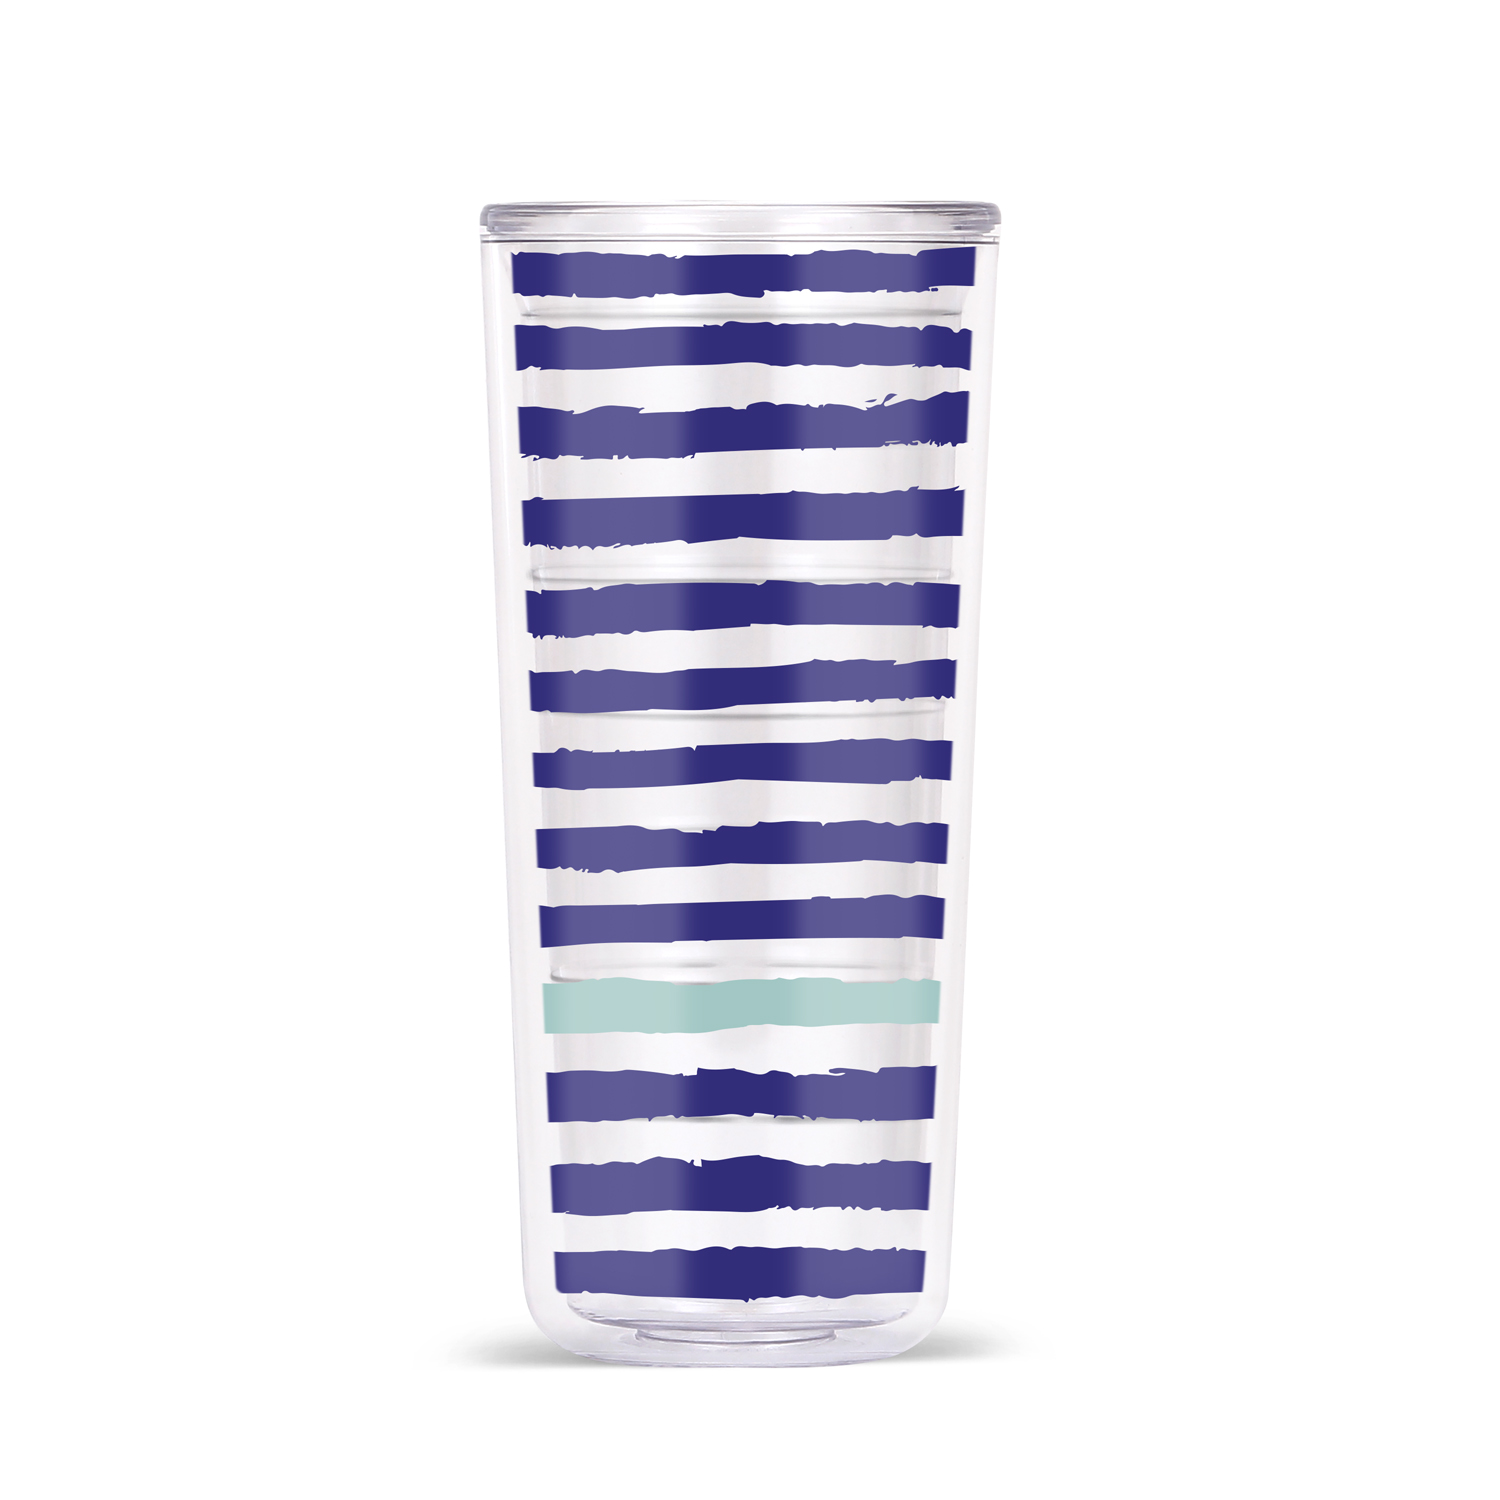 18oz DW Insulated Tritan Tumbler - Stripes & Spirals - Blue and Sea Aqua Stripes